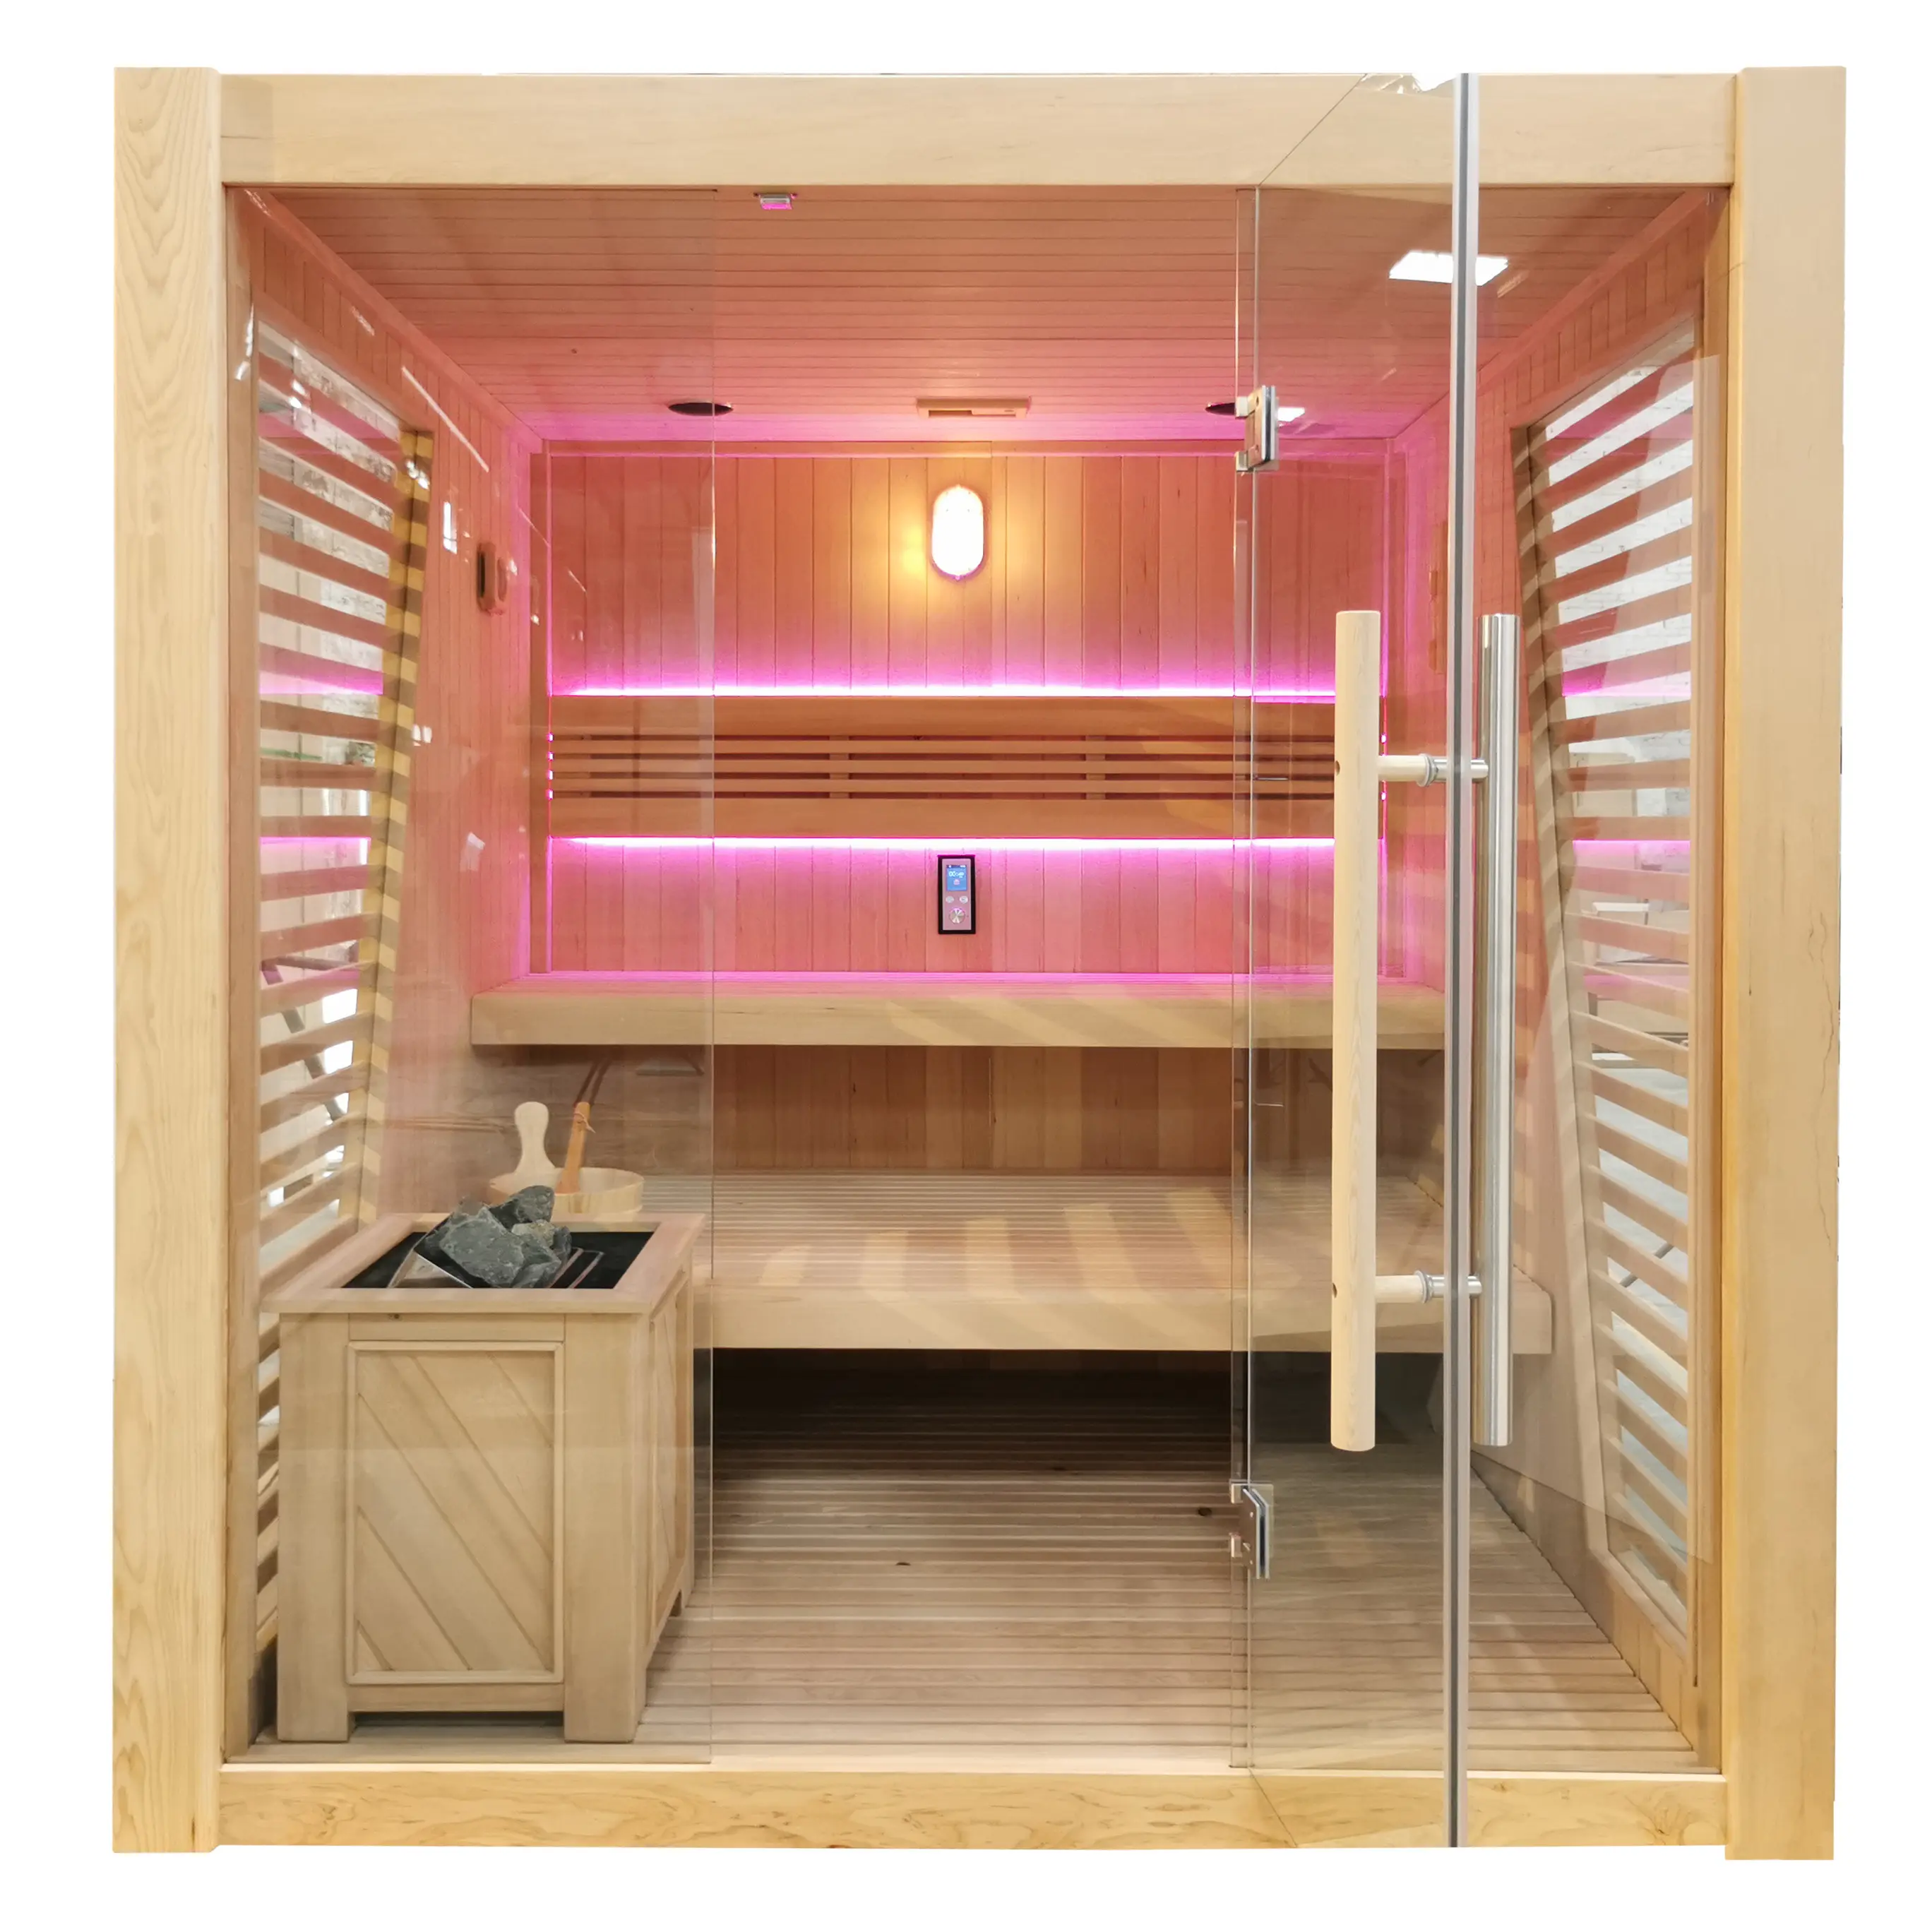 Sauna de madera maciza de lujo Popular Swankia, sala de sauna de vapor seco interior, sala de sauna de cedro rojo infrarrojo lejano, estufa harvia